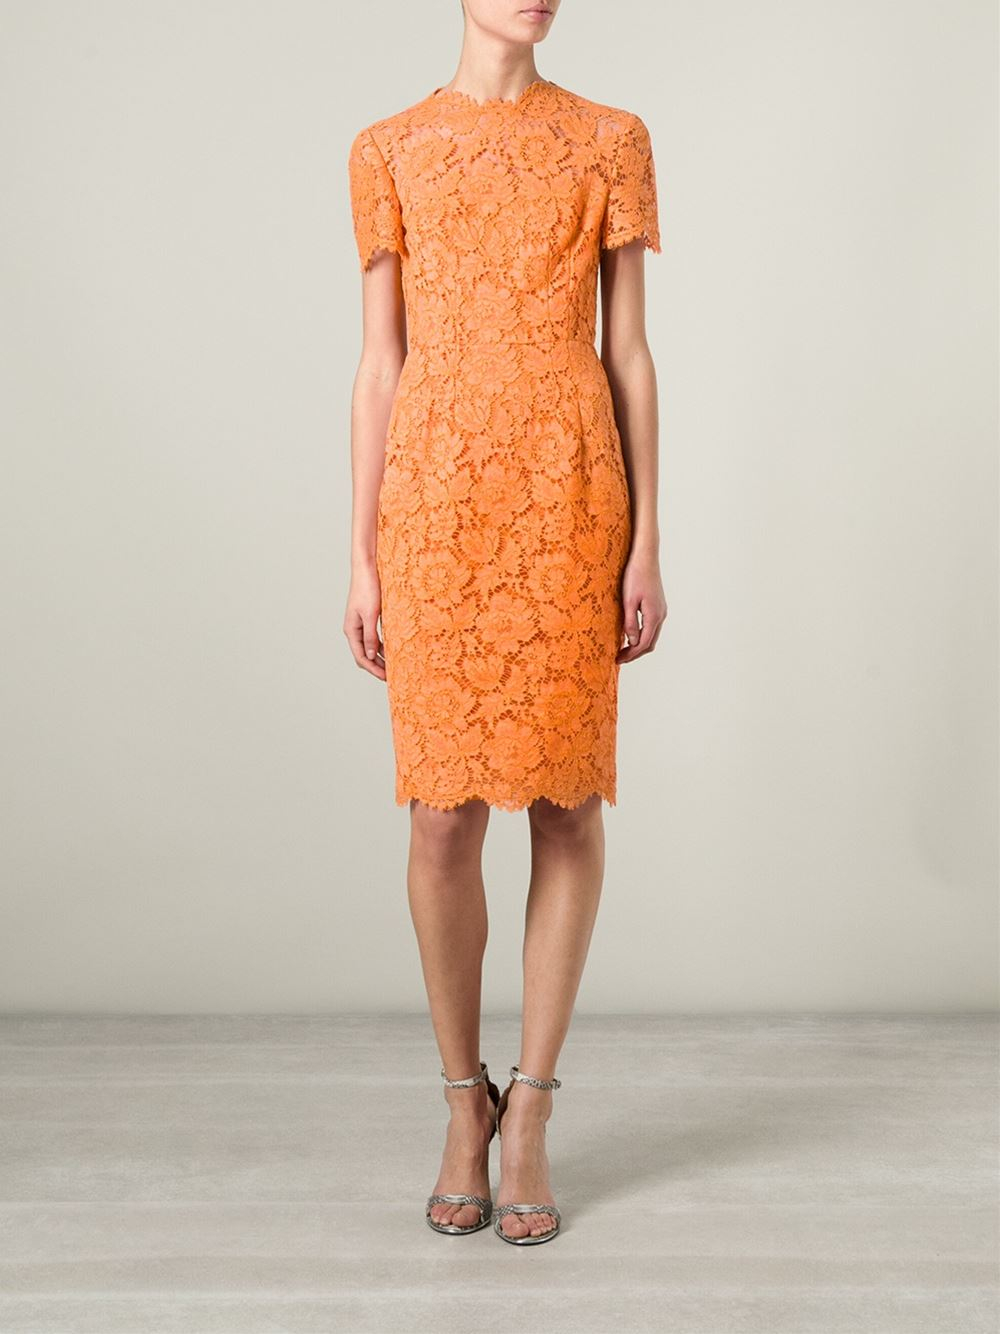 Valentino Lace Dress in Yellow & Orange (Orange) - Lyst